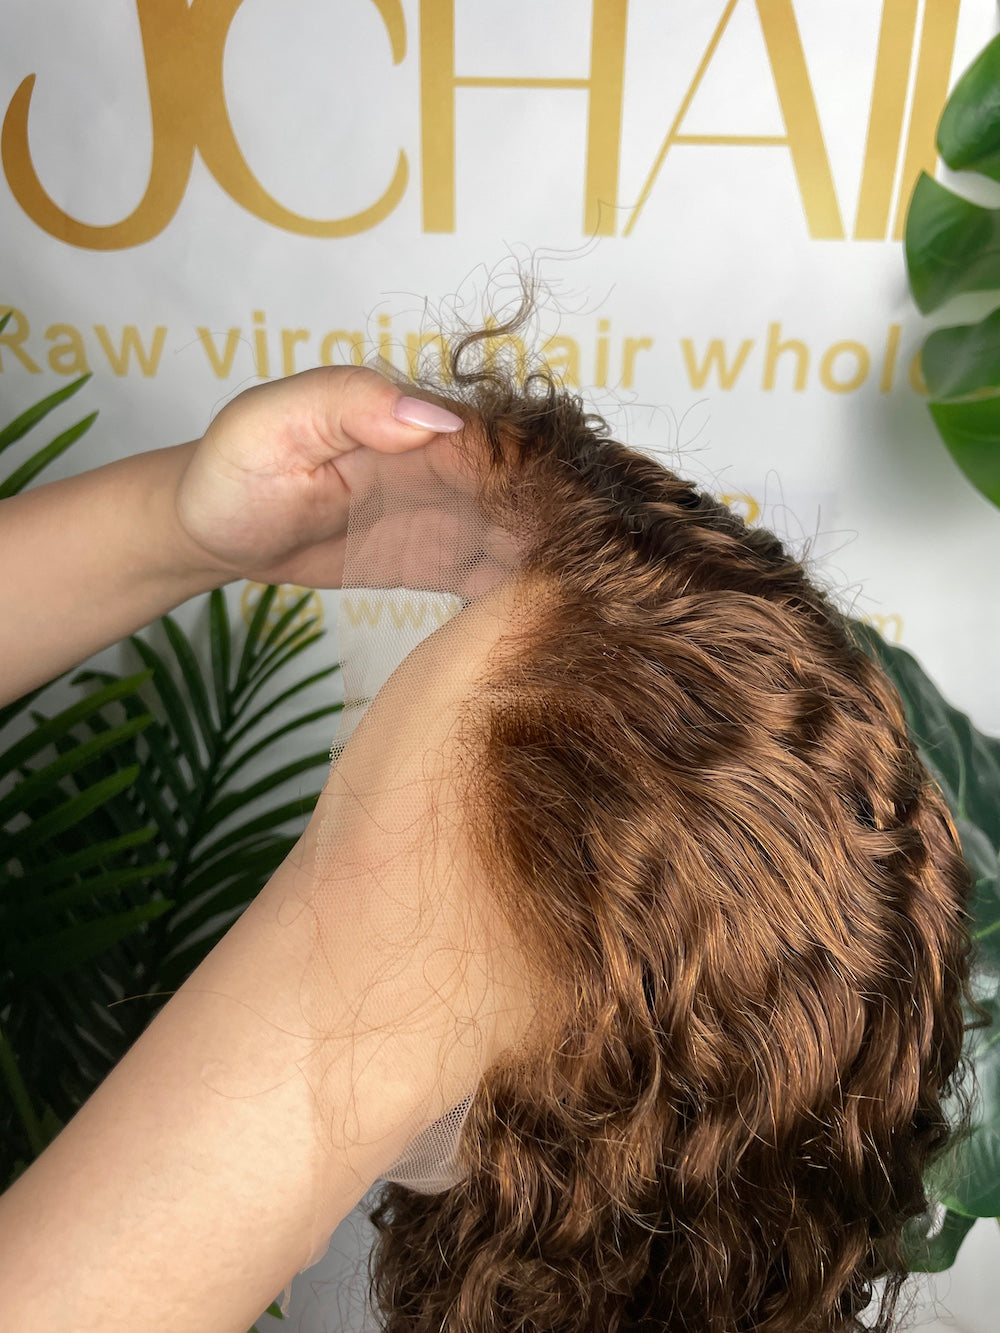 #4 Chocolate Italian Curly Brazilian Hair 13X4 Transparent Lace Wig 180%